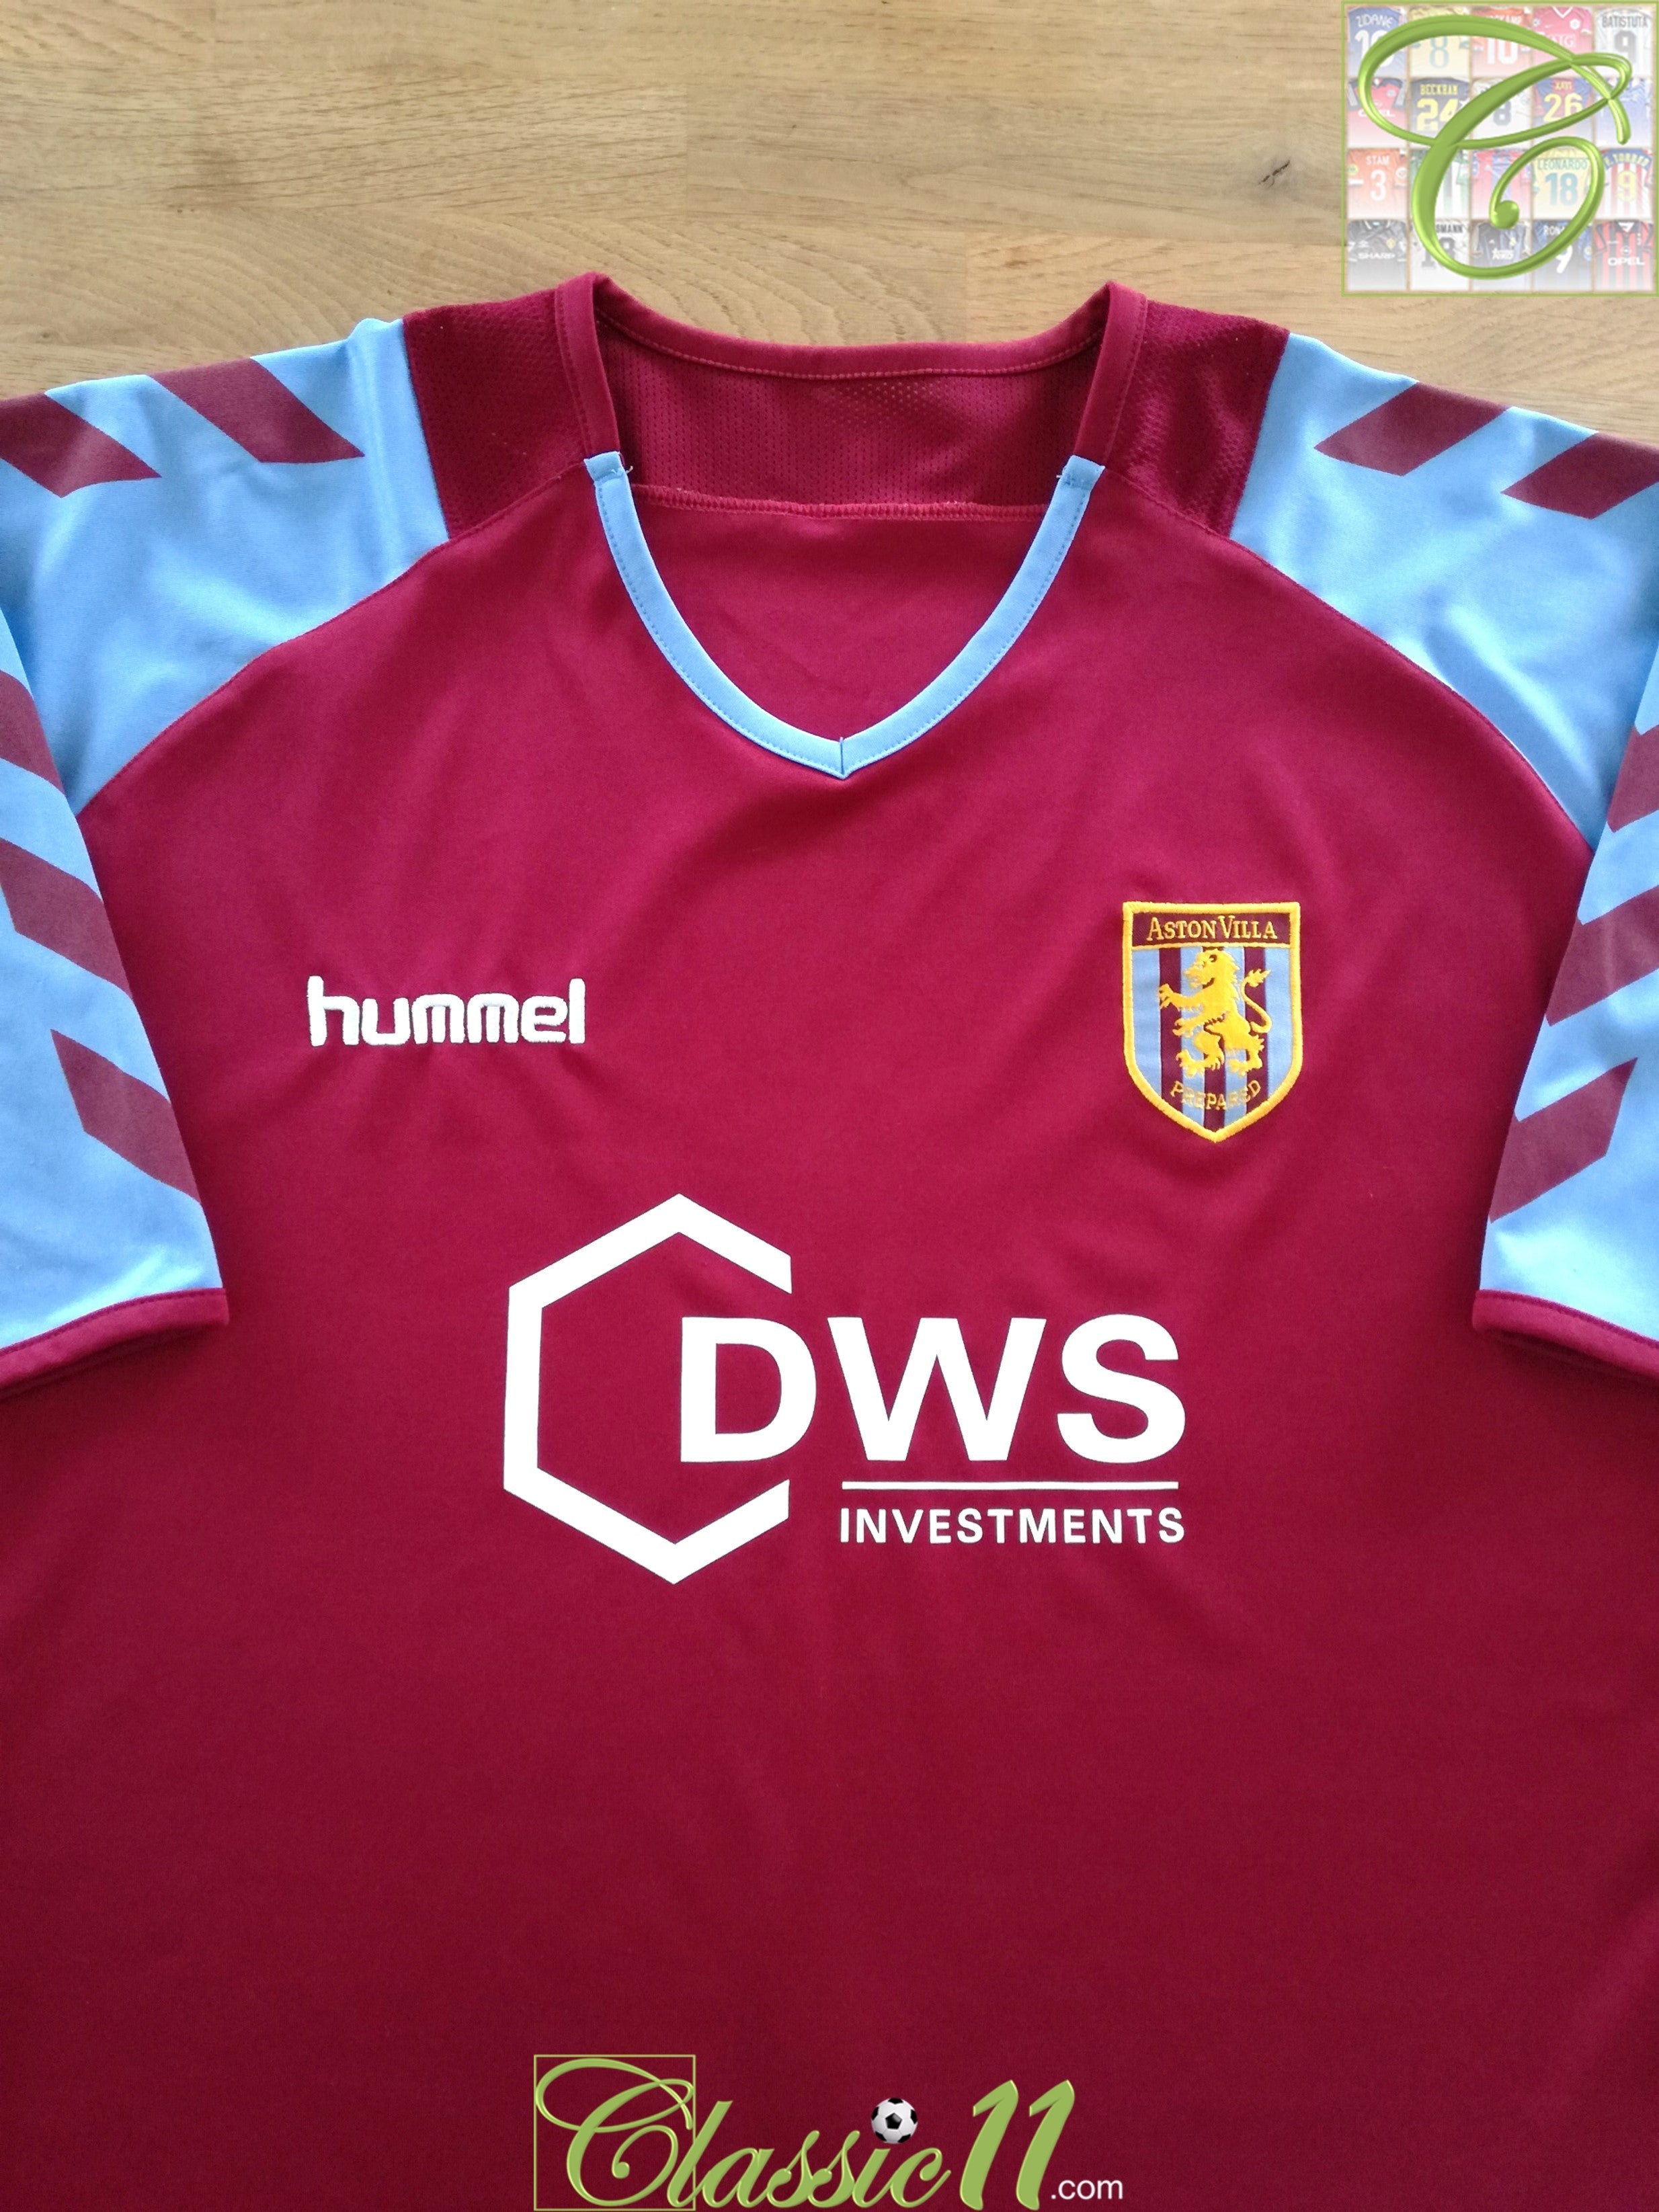 2004/05 Aston Villa Home Football Shirt / Old Hummel Soccer Jersey ...